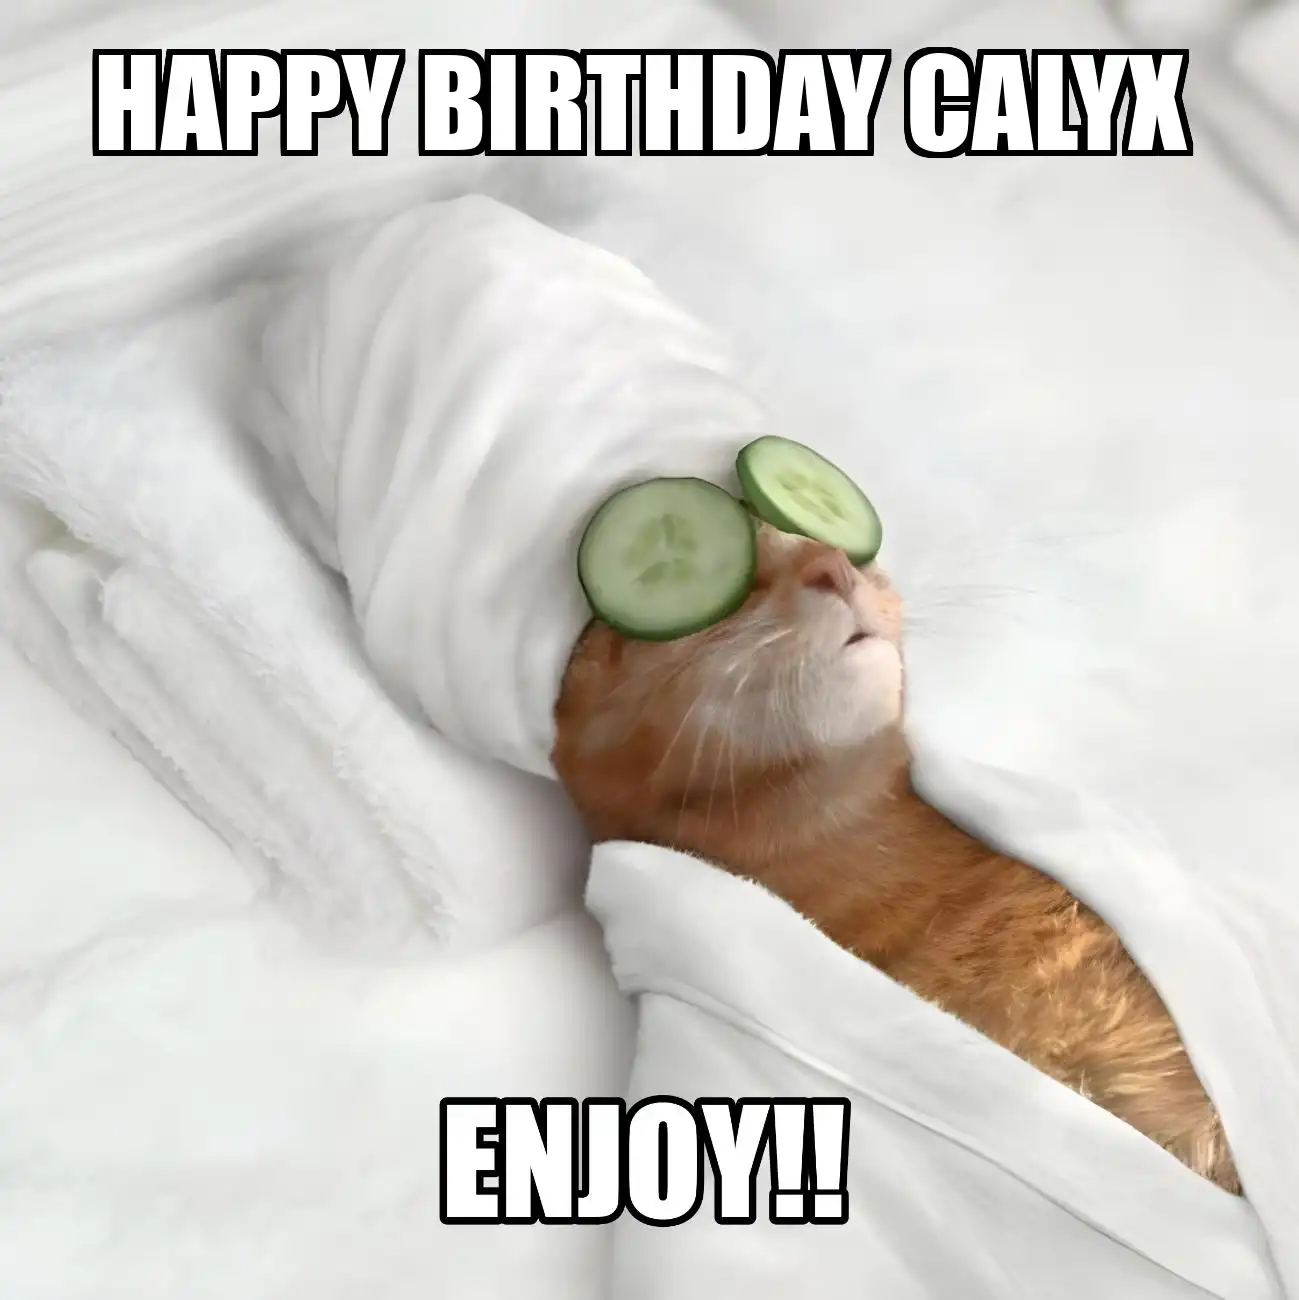 Happy Birthday Calyx Enjoy Cat Meme